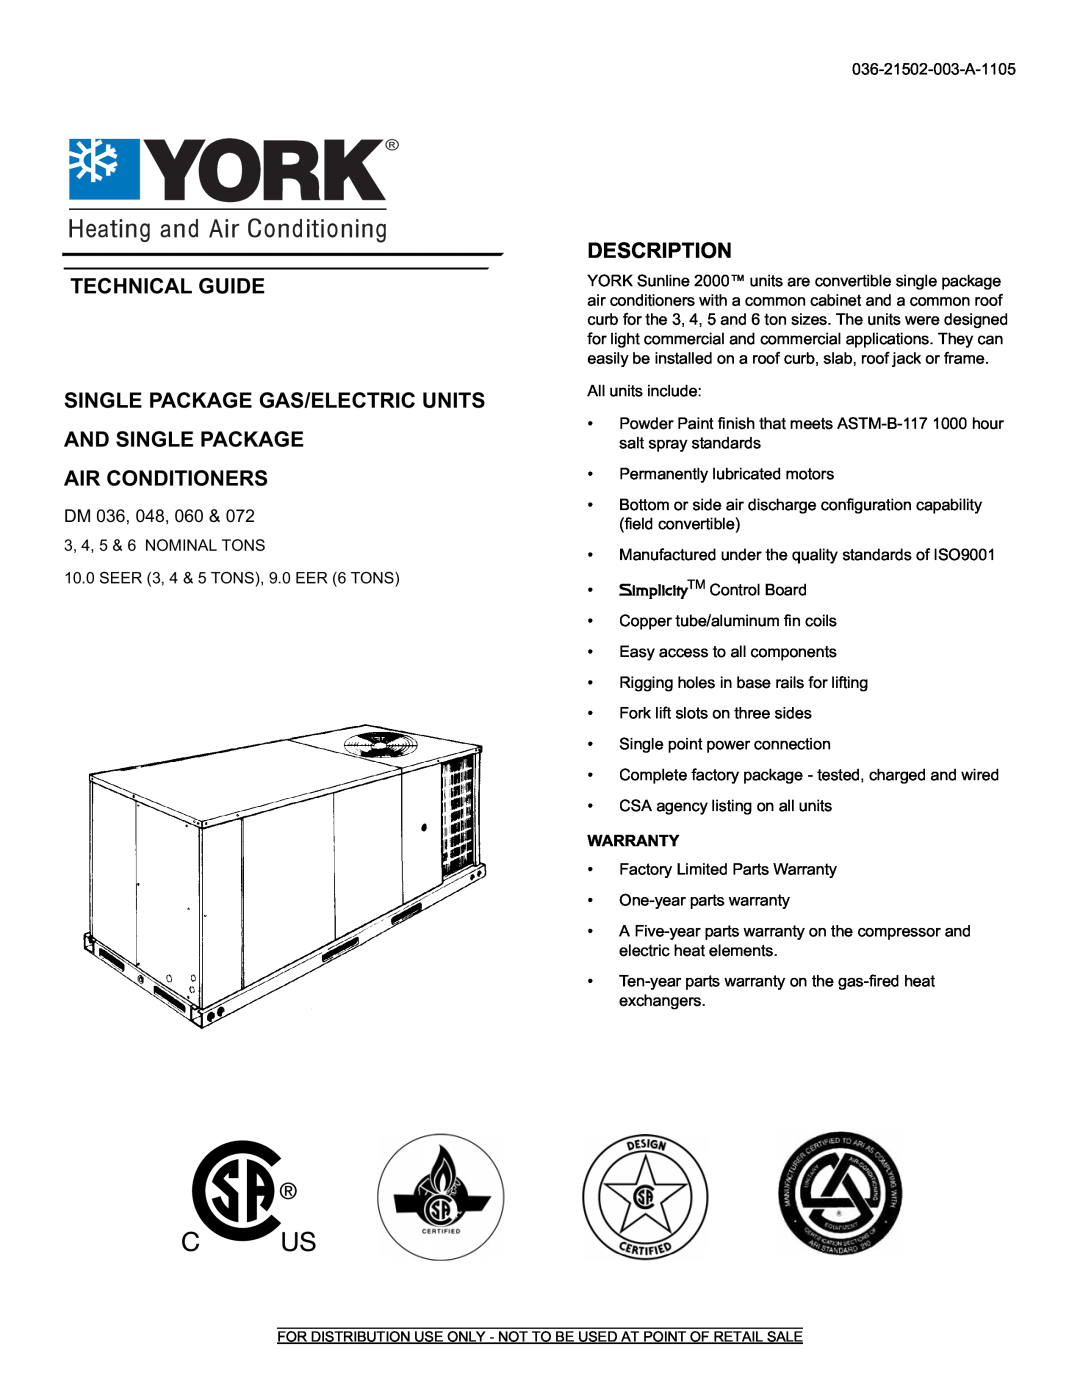 York DM 072 warranty Technical Guide, Air Conditioners, Description, DM 036, 048, 060 